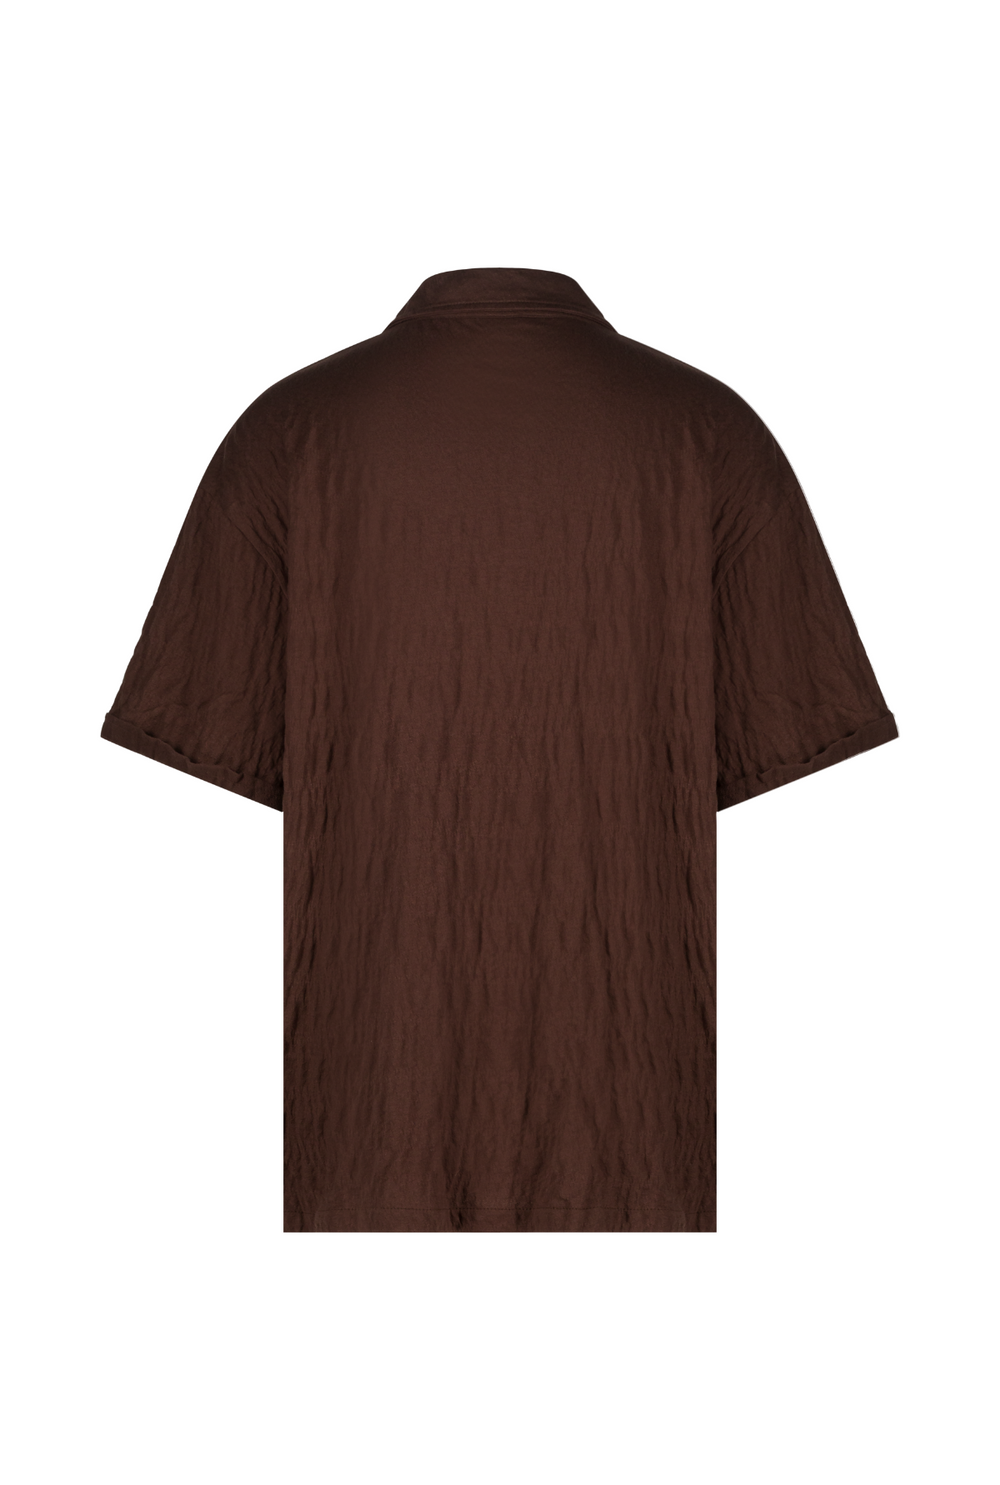 Manta Shirt - Chocolate Brown